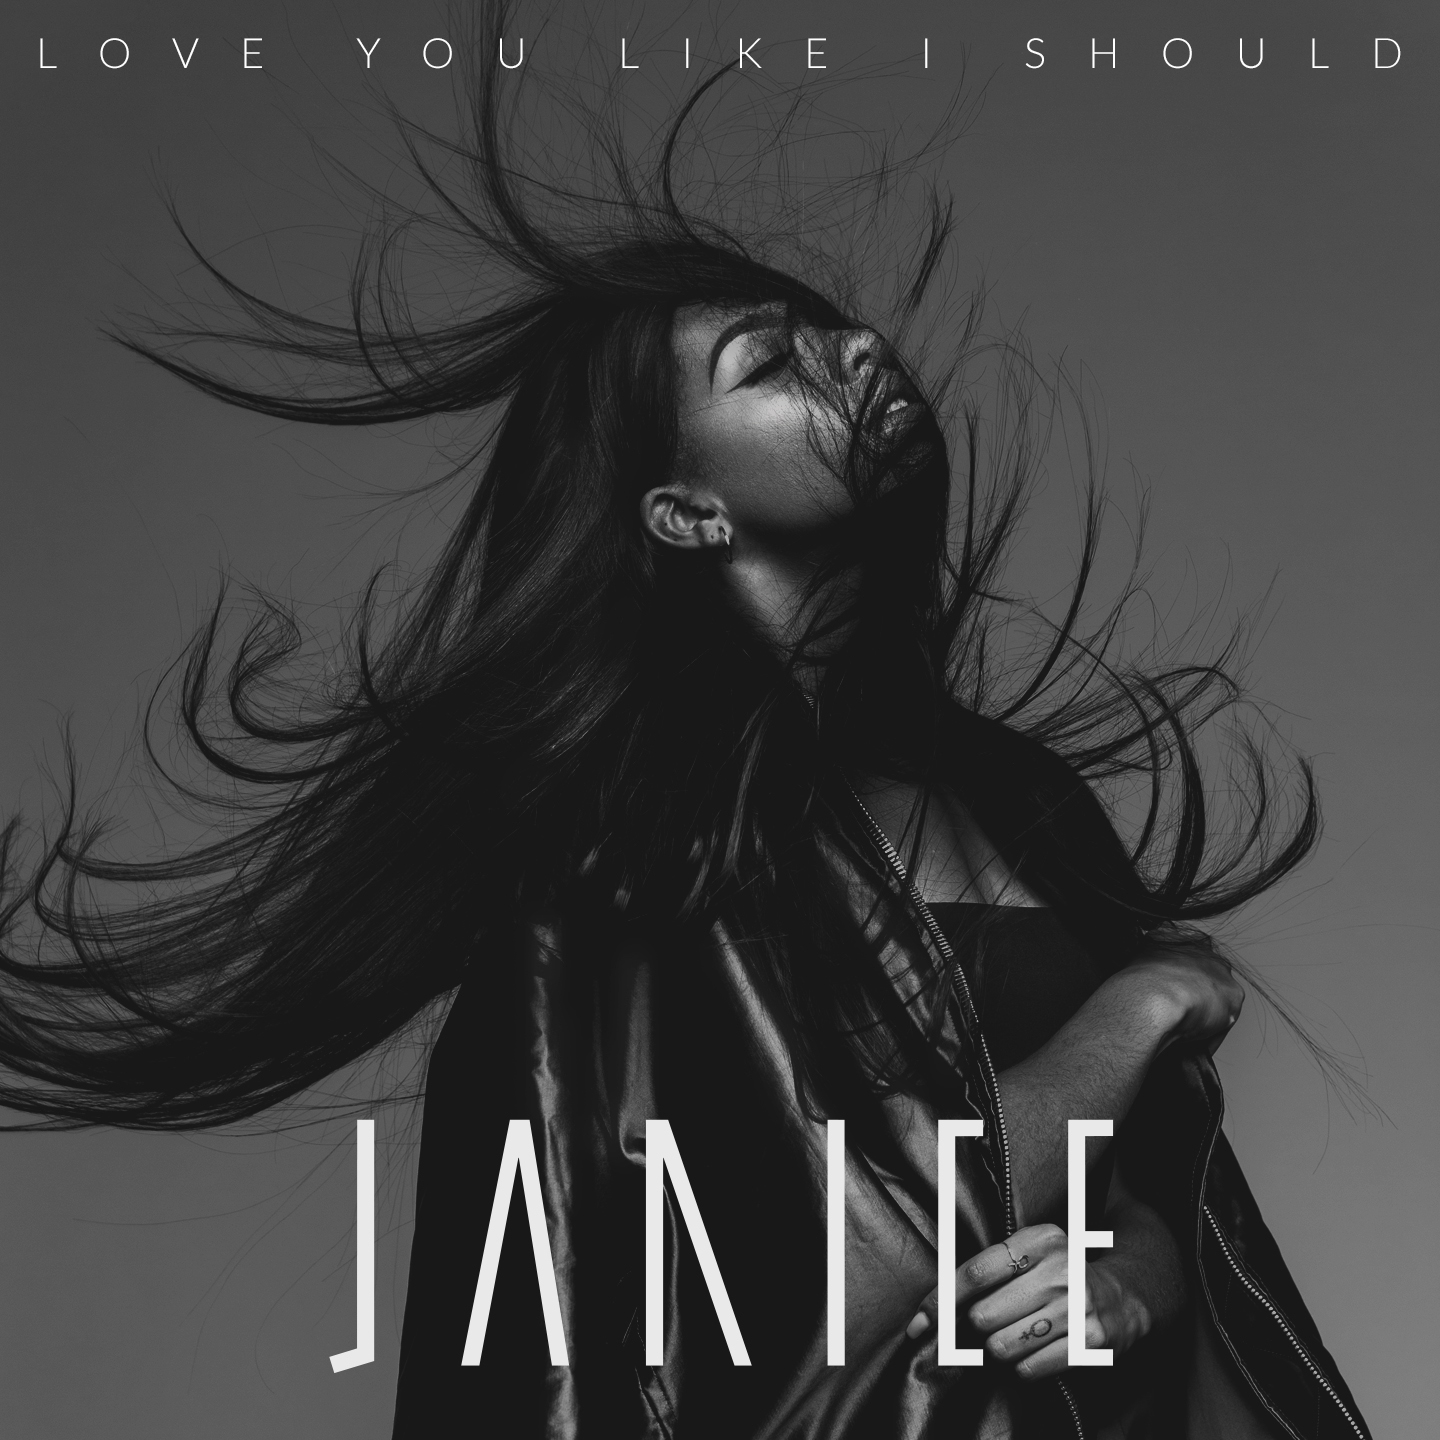 Janice Love you like Singel 1440x1440px